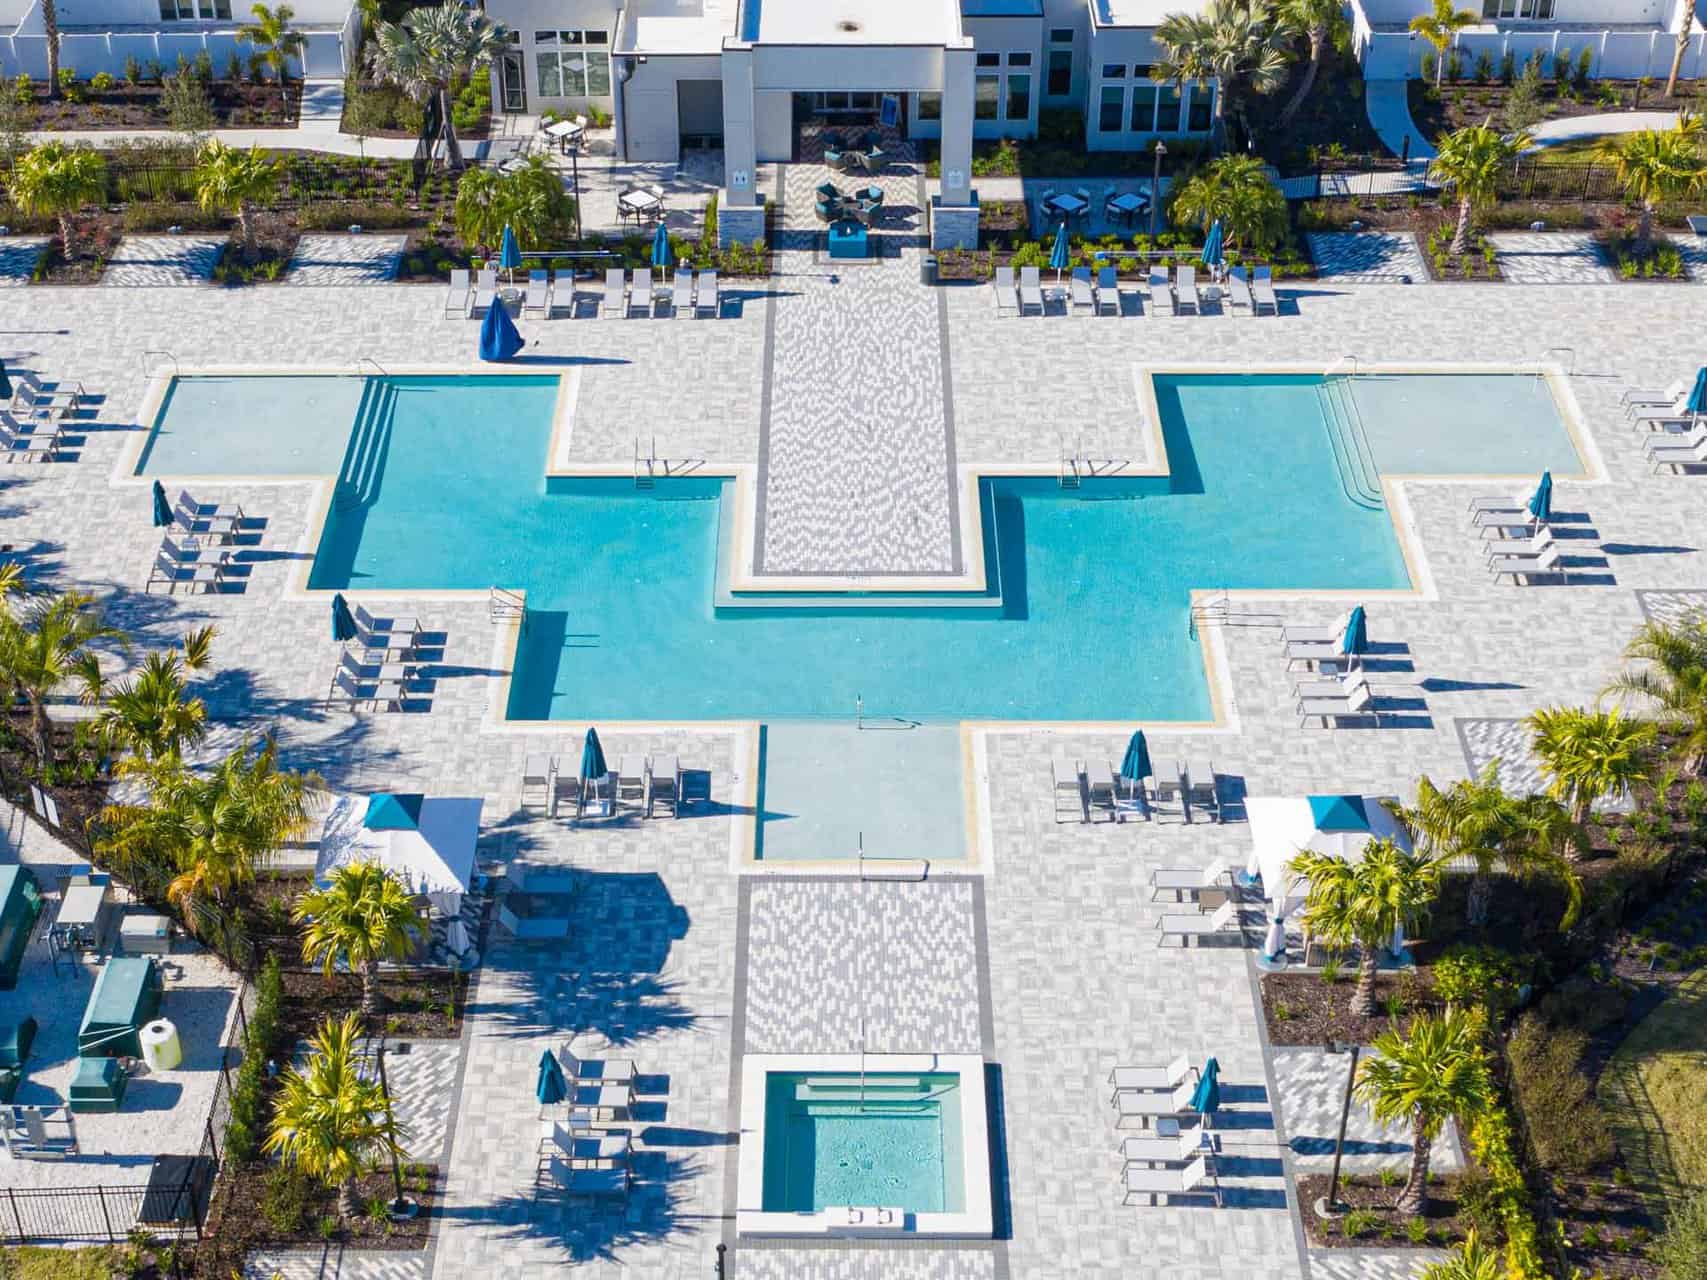 Spectrum Resort Orlando clubhouse and resort pool